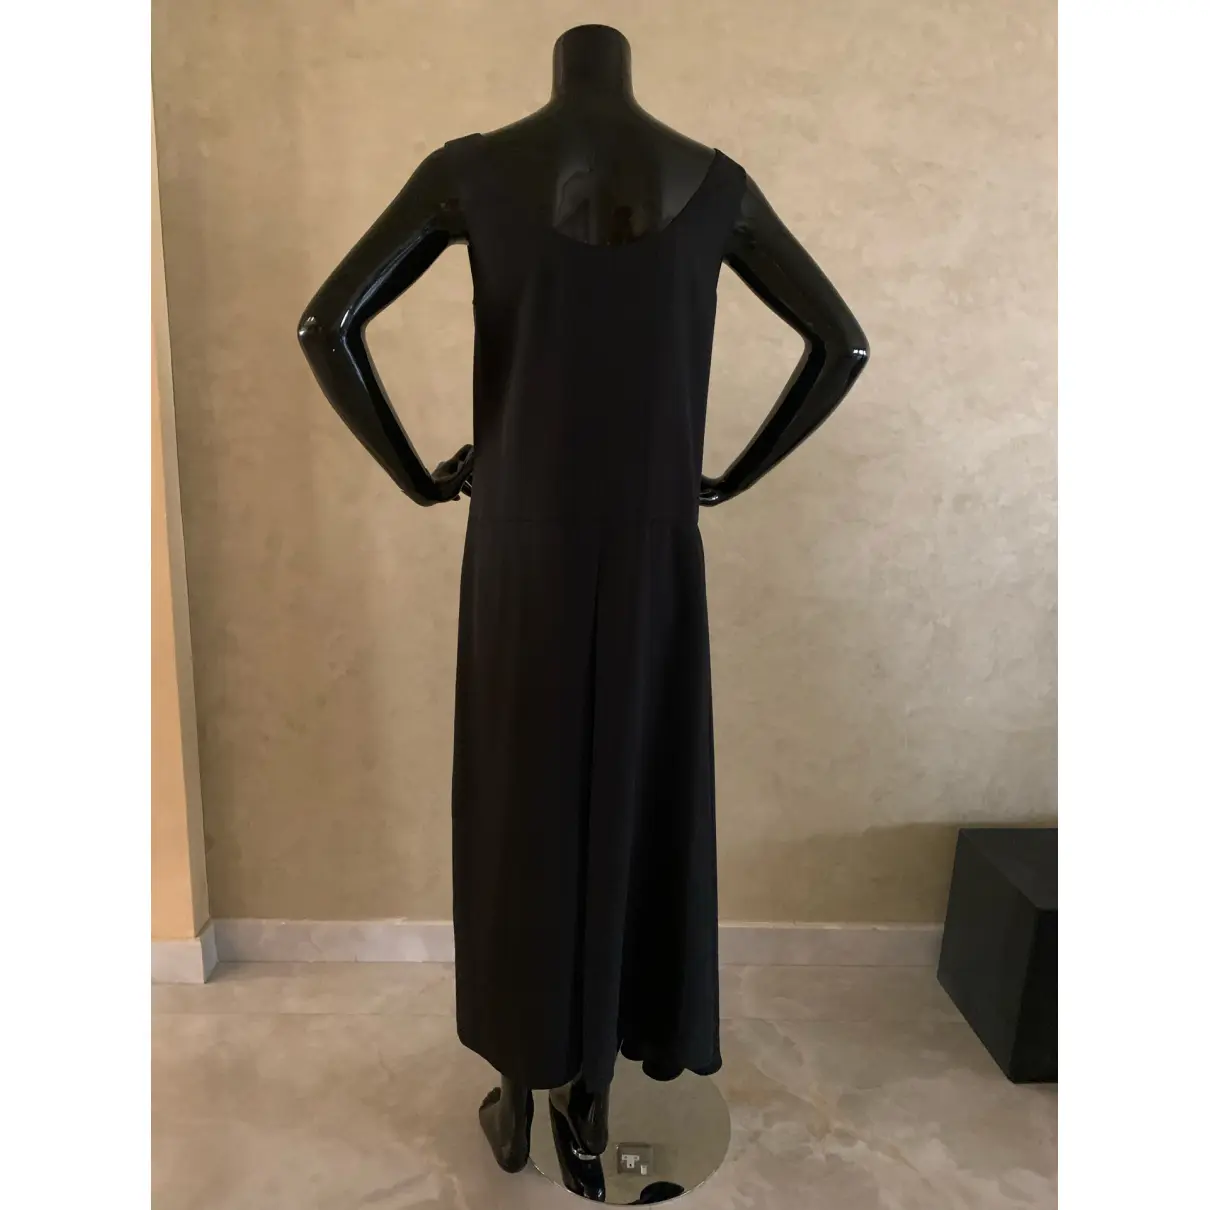 Buy Prada Dress online